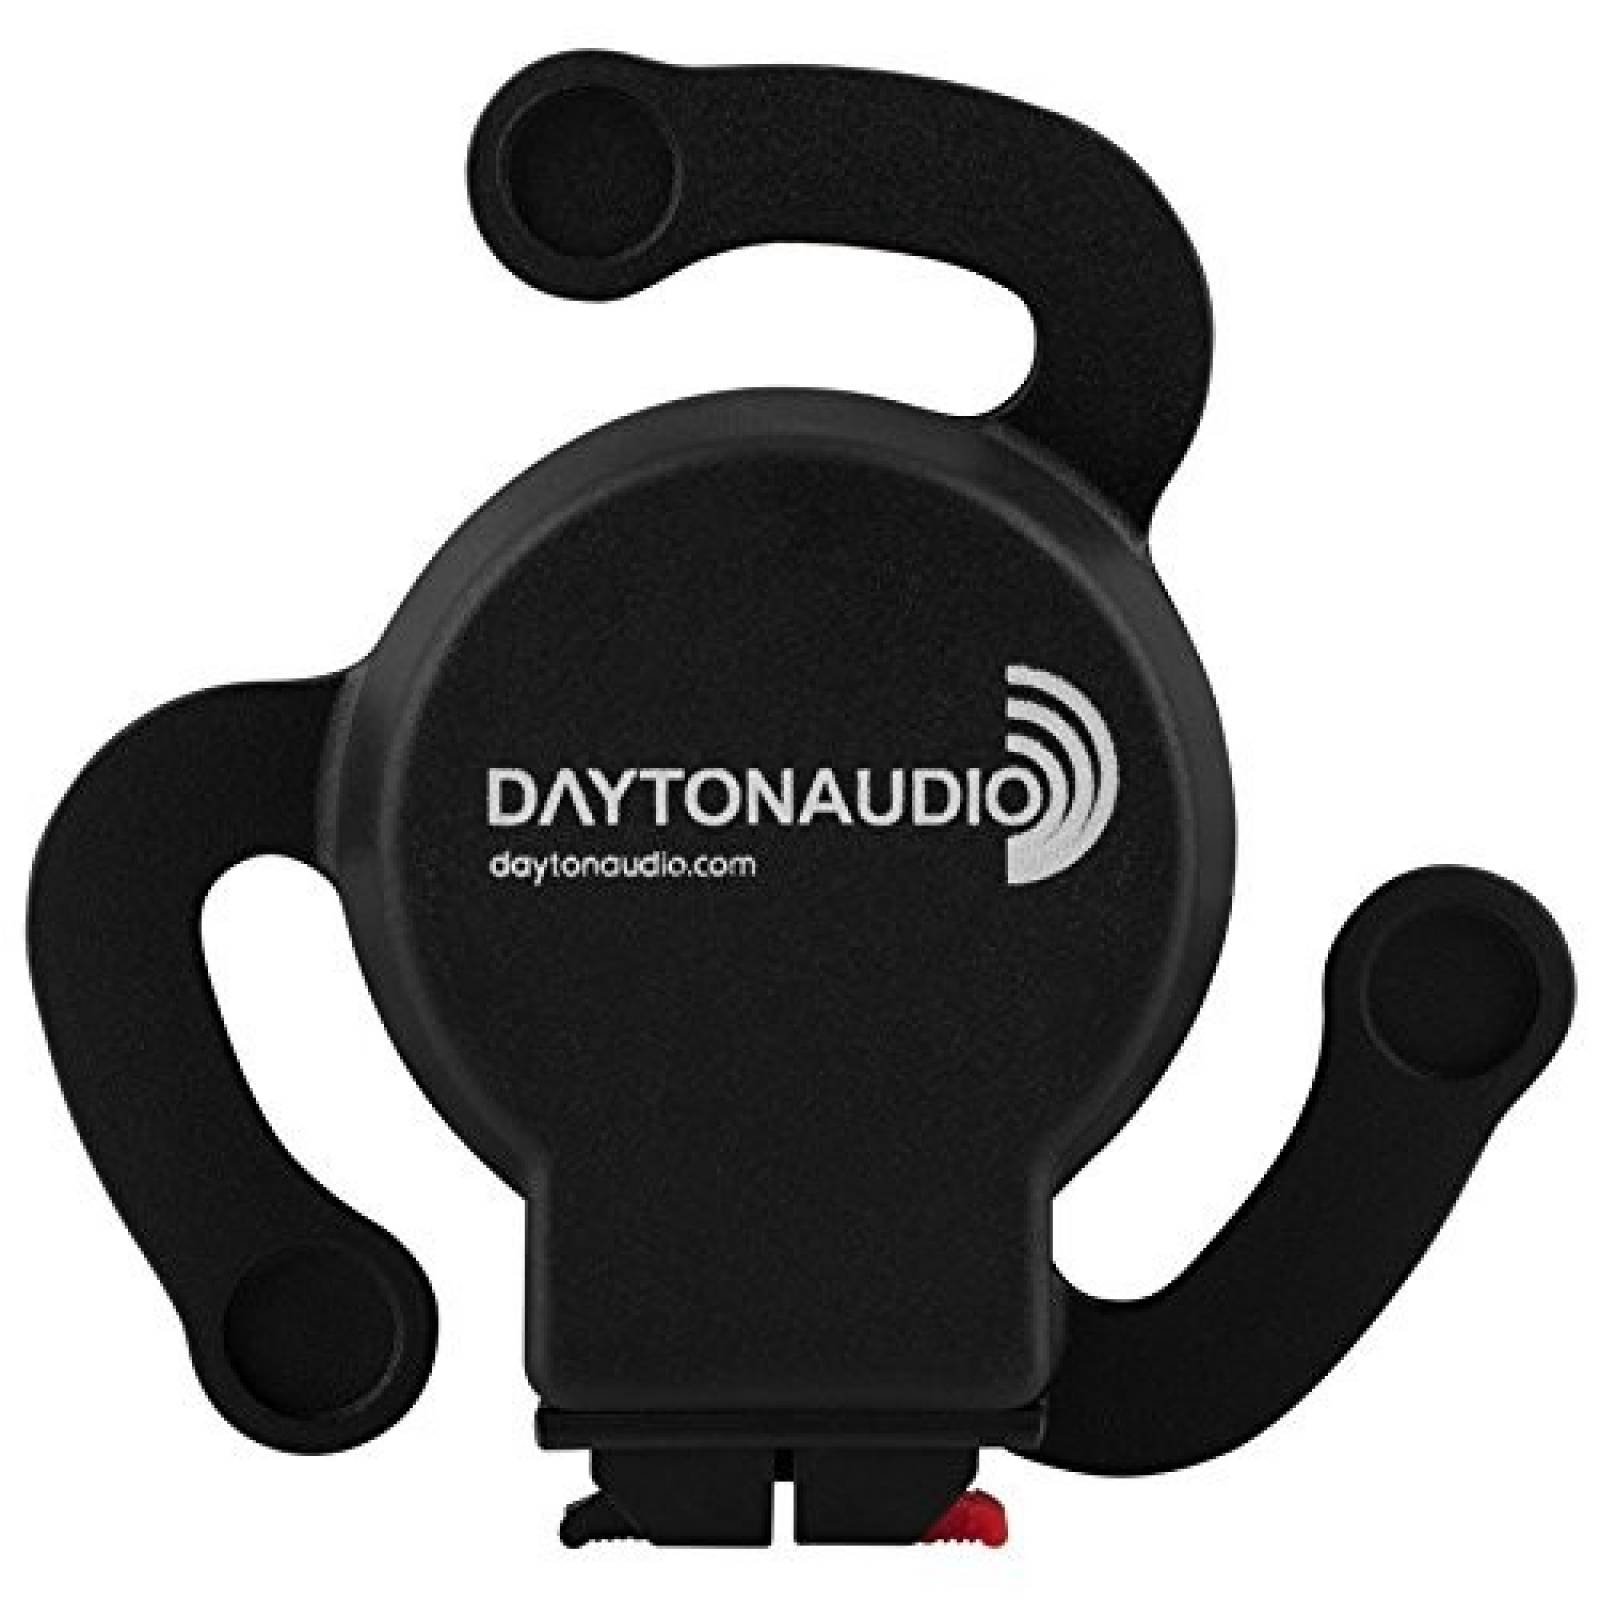 Sistema de altavoces Dayton Audio daex25 -Negro